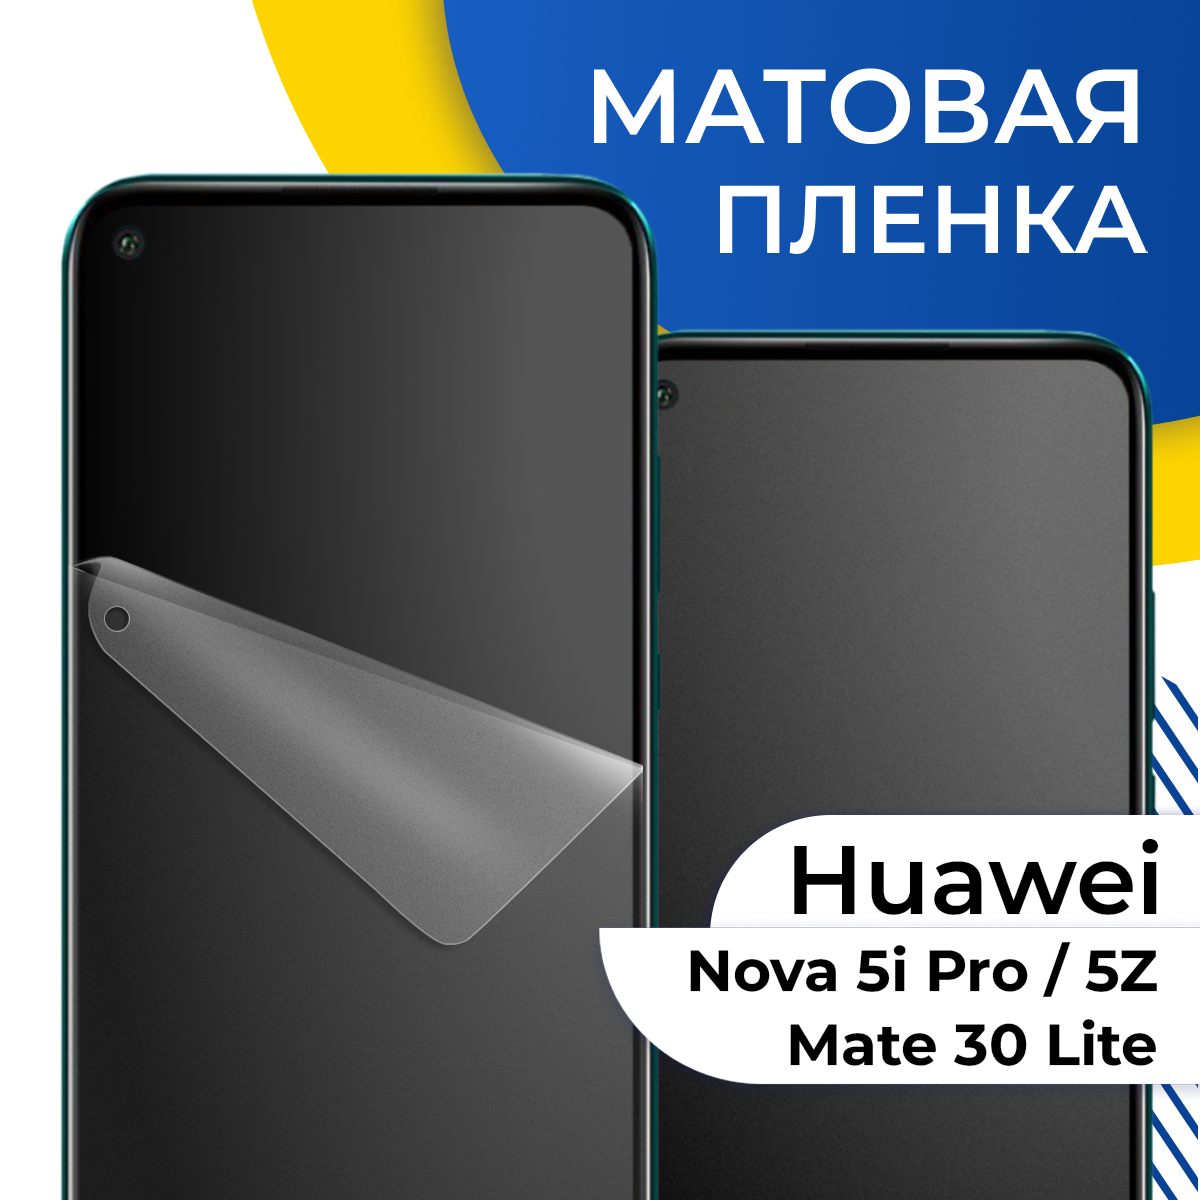 Комплект 2 шт. Матовая гидрогелевая пленка для телефона Huawei Nova 5i Pro, 5Z и Mate 30 Lite / Защитная пленка на смартфон Хуавей Нова 5ай Про, 5З и Мейт 30 Лайт